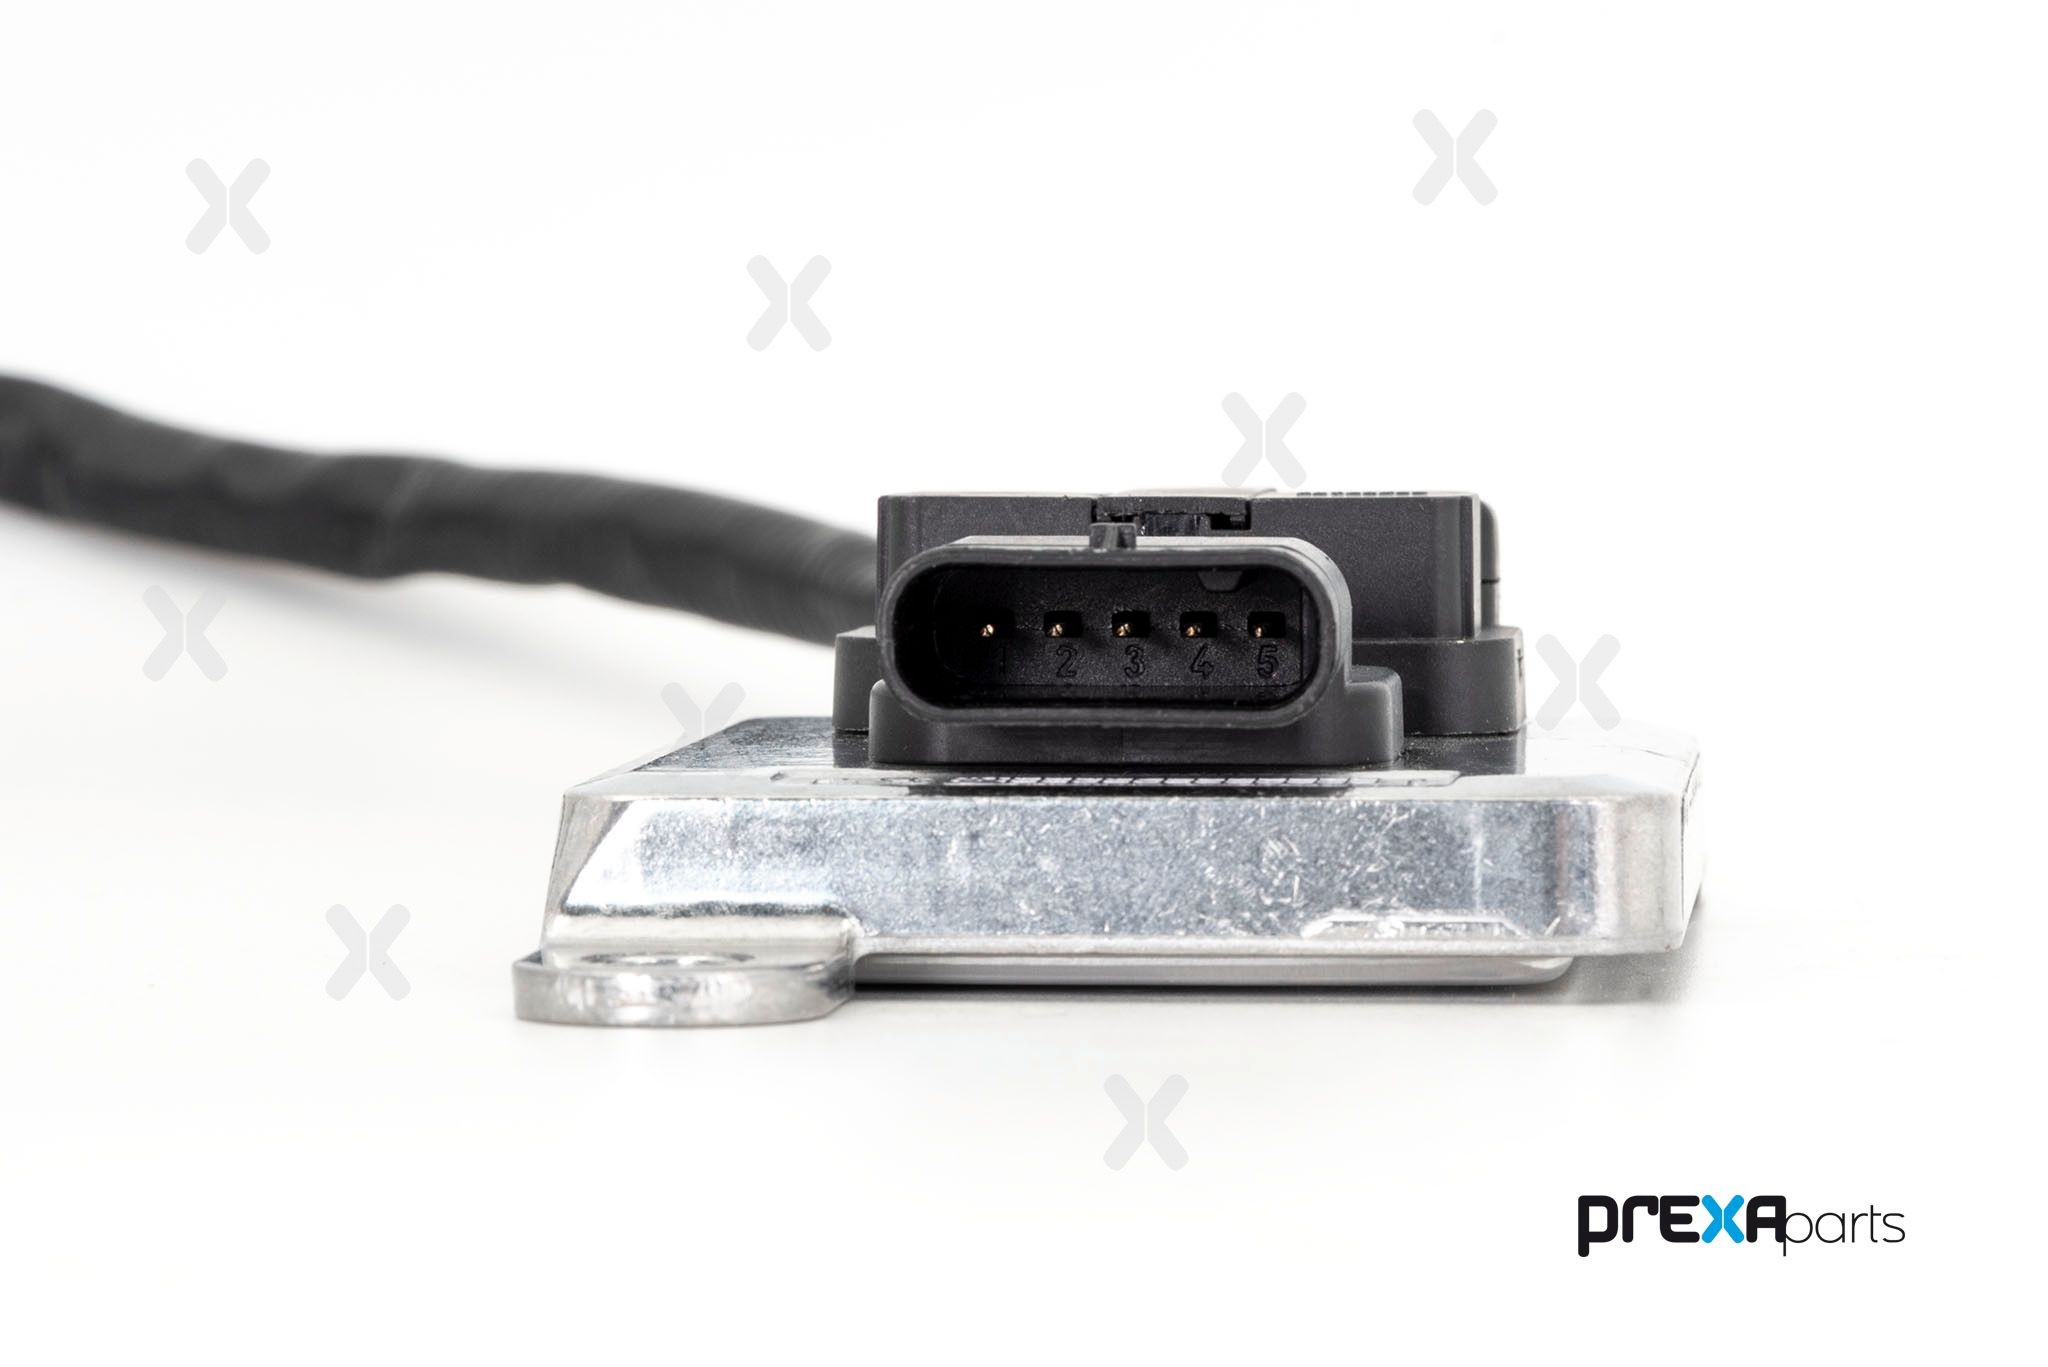 PREXAparts P304121 NOx Sensor, urea injection